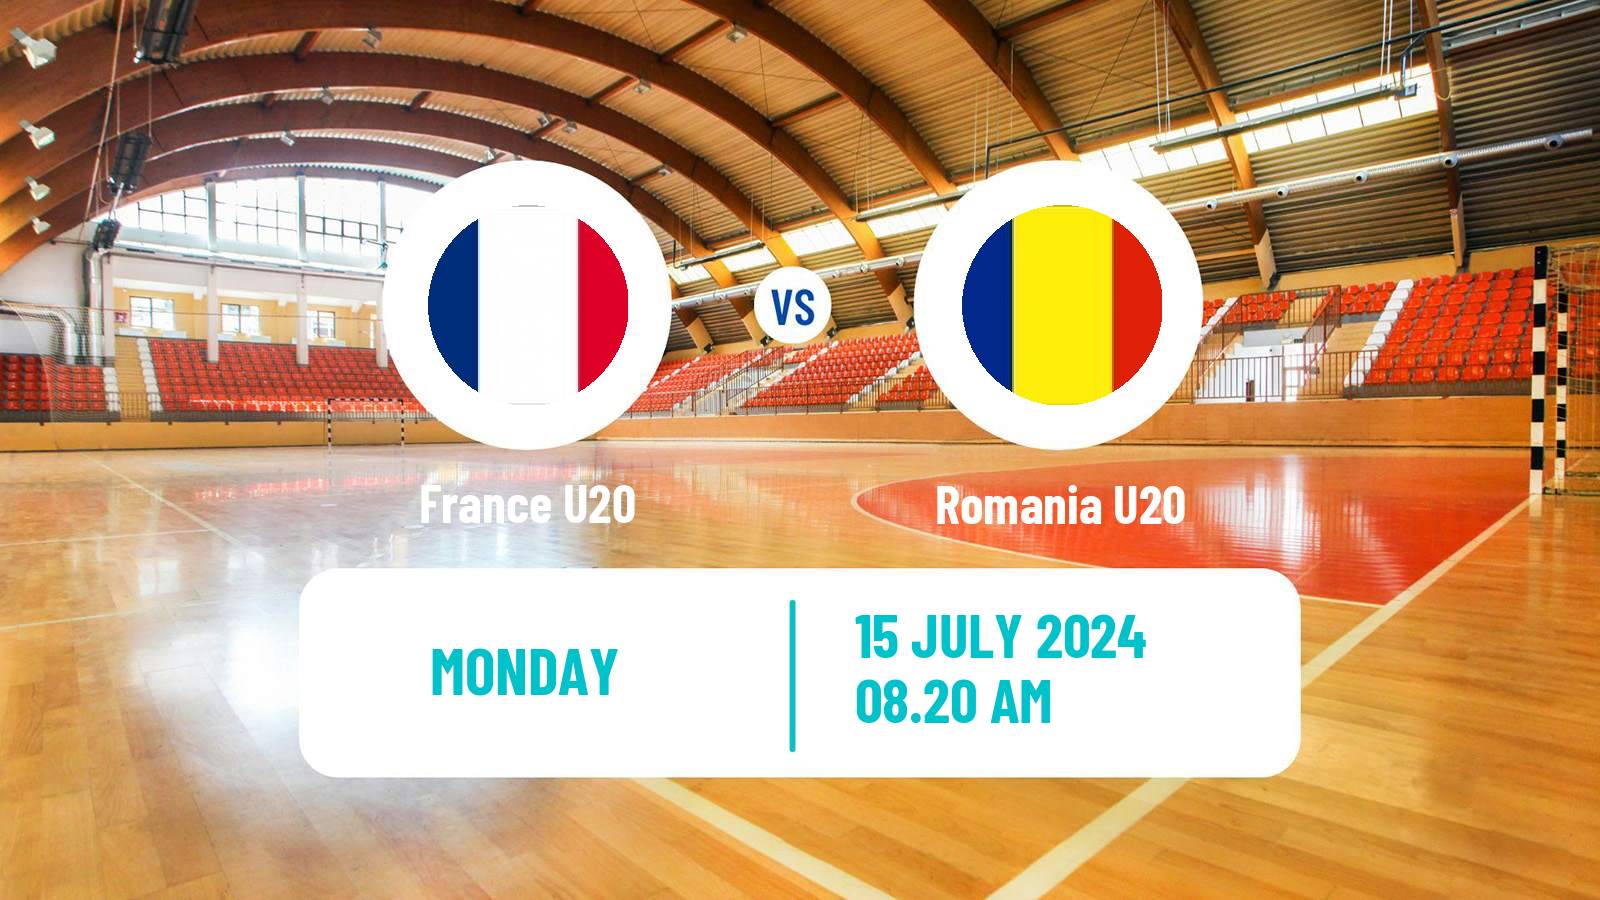 Handball European Championship U20 Handball France U20 - Romania U20